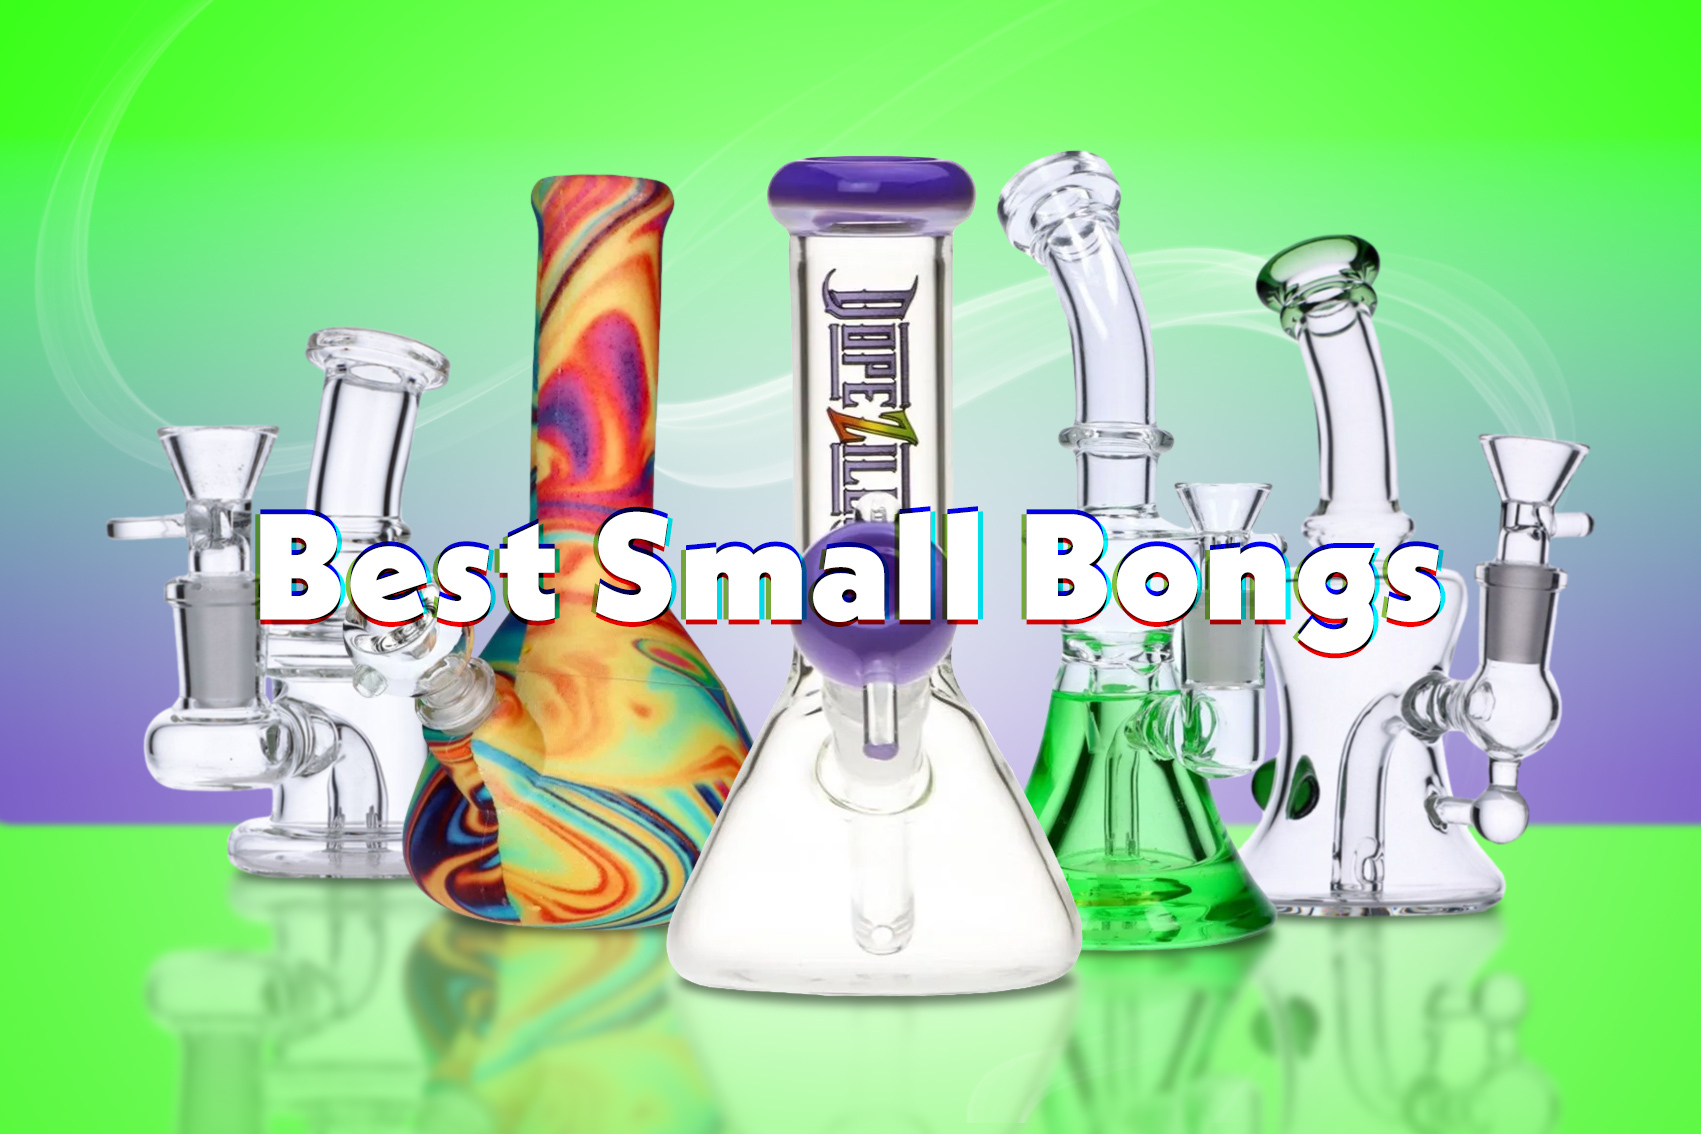 Best Small Bongs